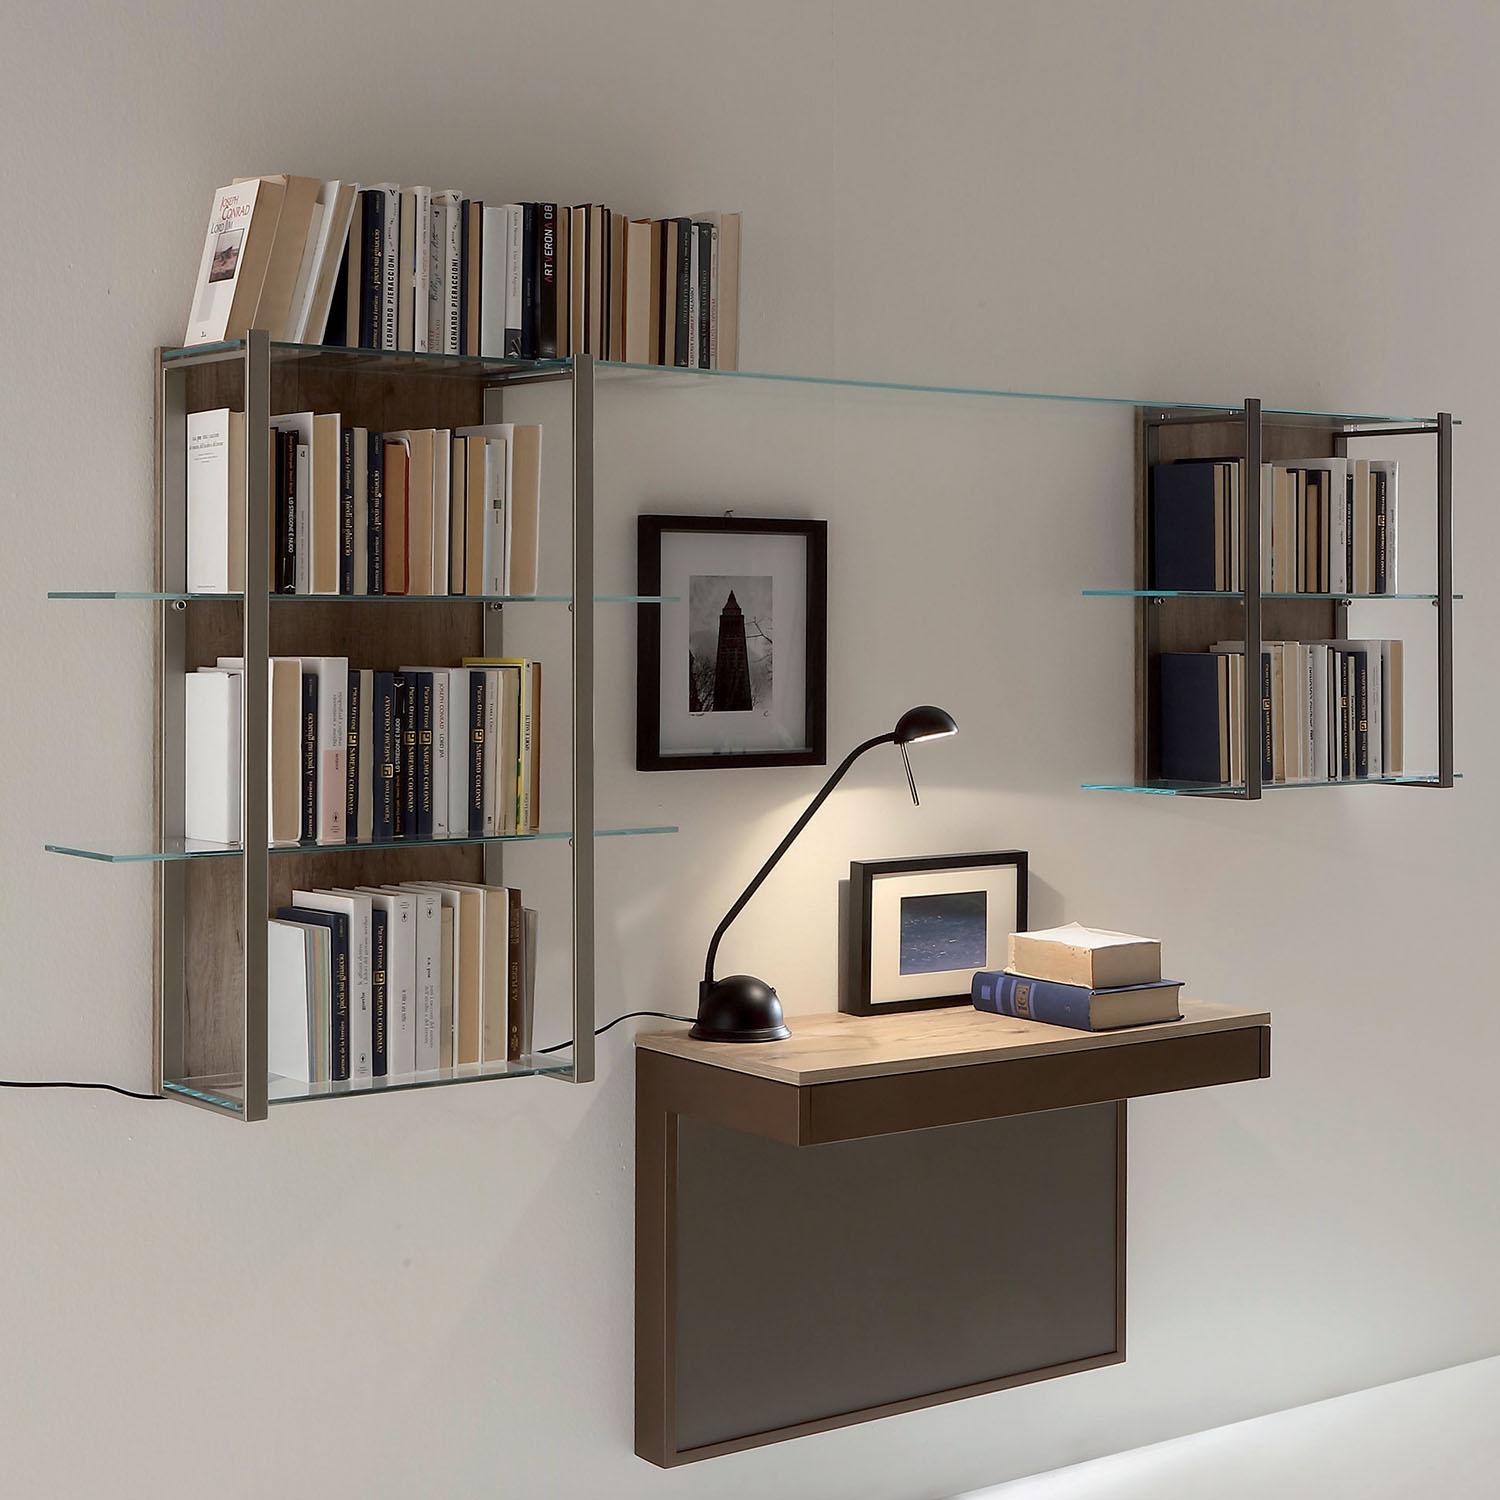 Treccia wall modular glass shelves